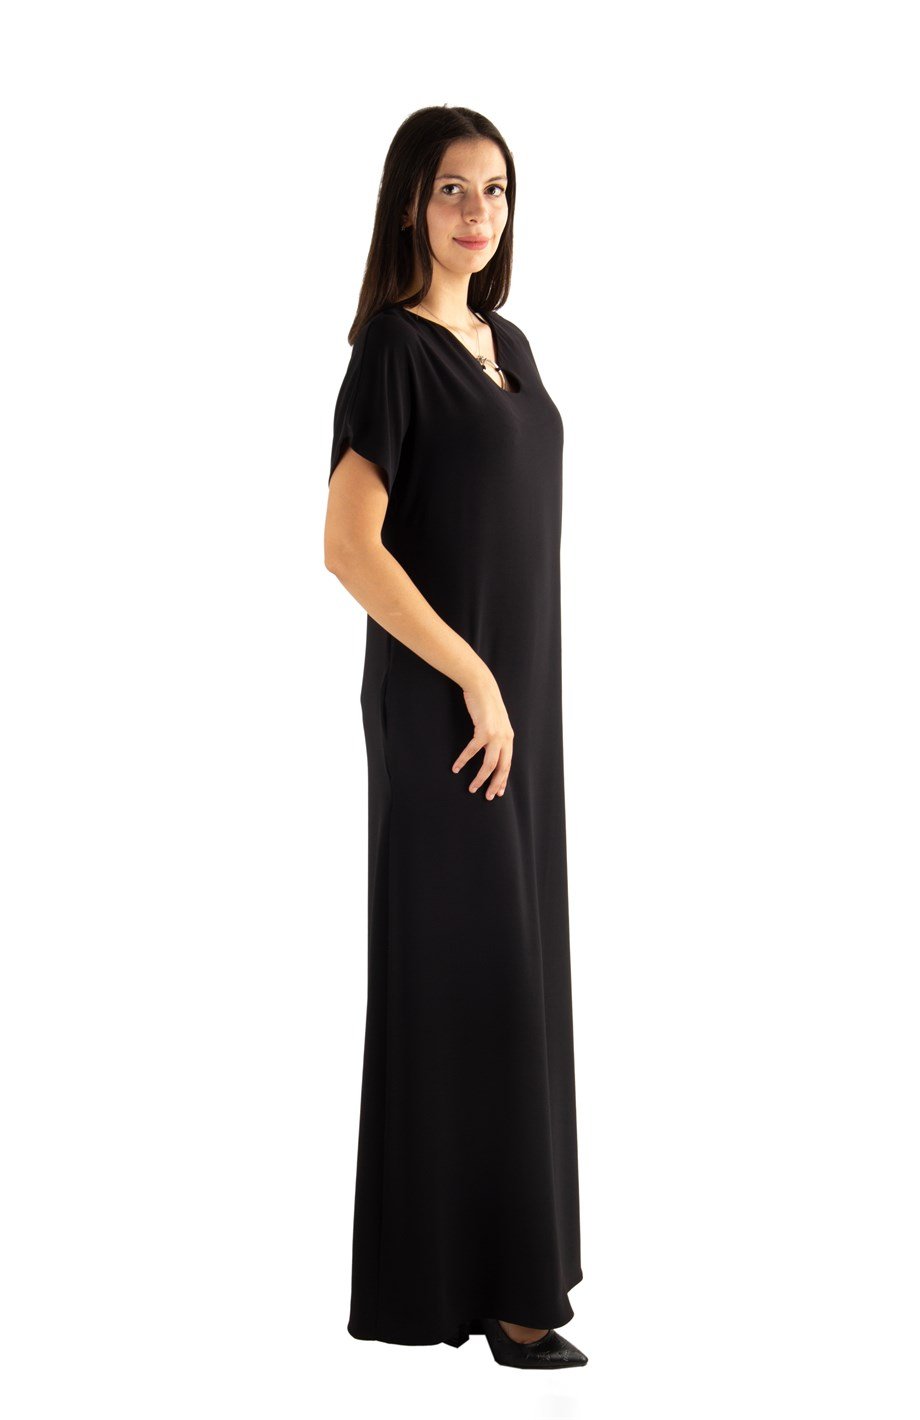 Ring Detail Long Big Size Dress - Black - Wholesale Womens Clothing Vendors  For Boutiques